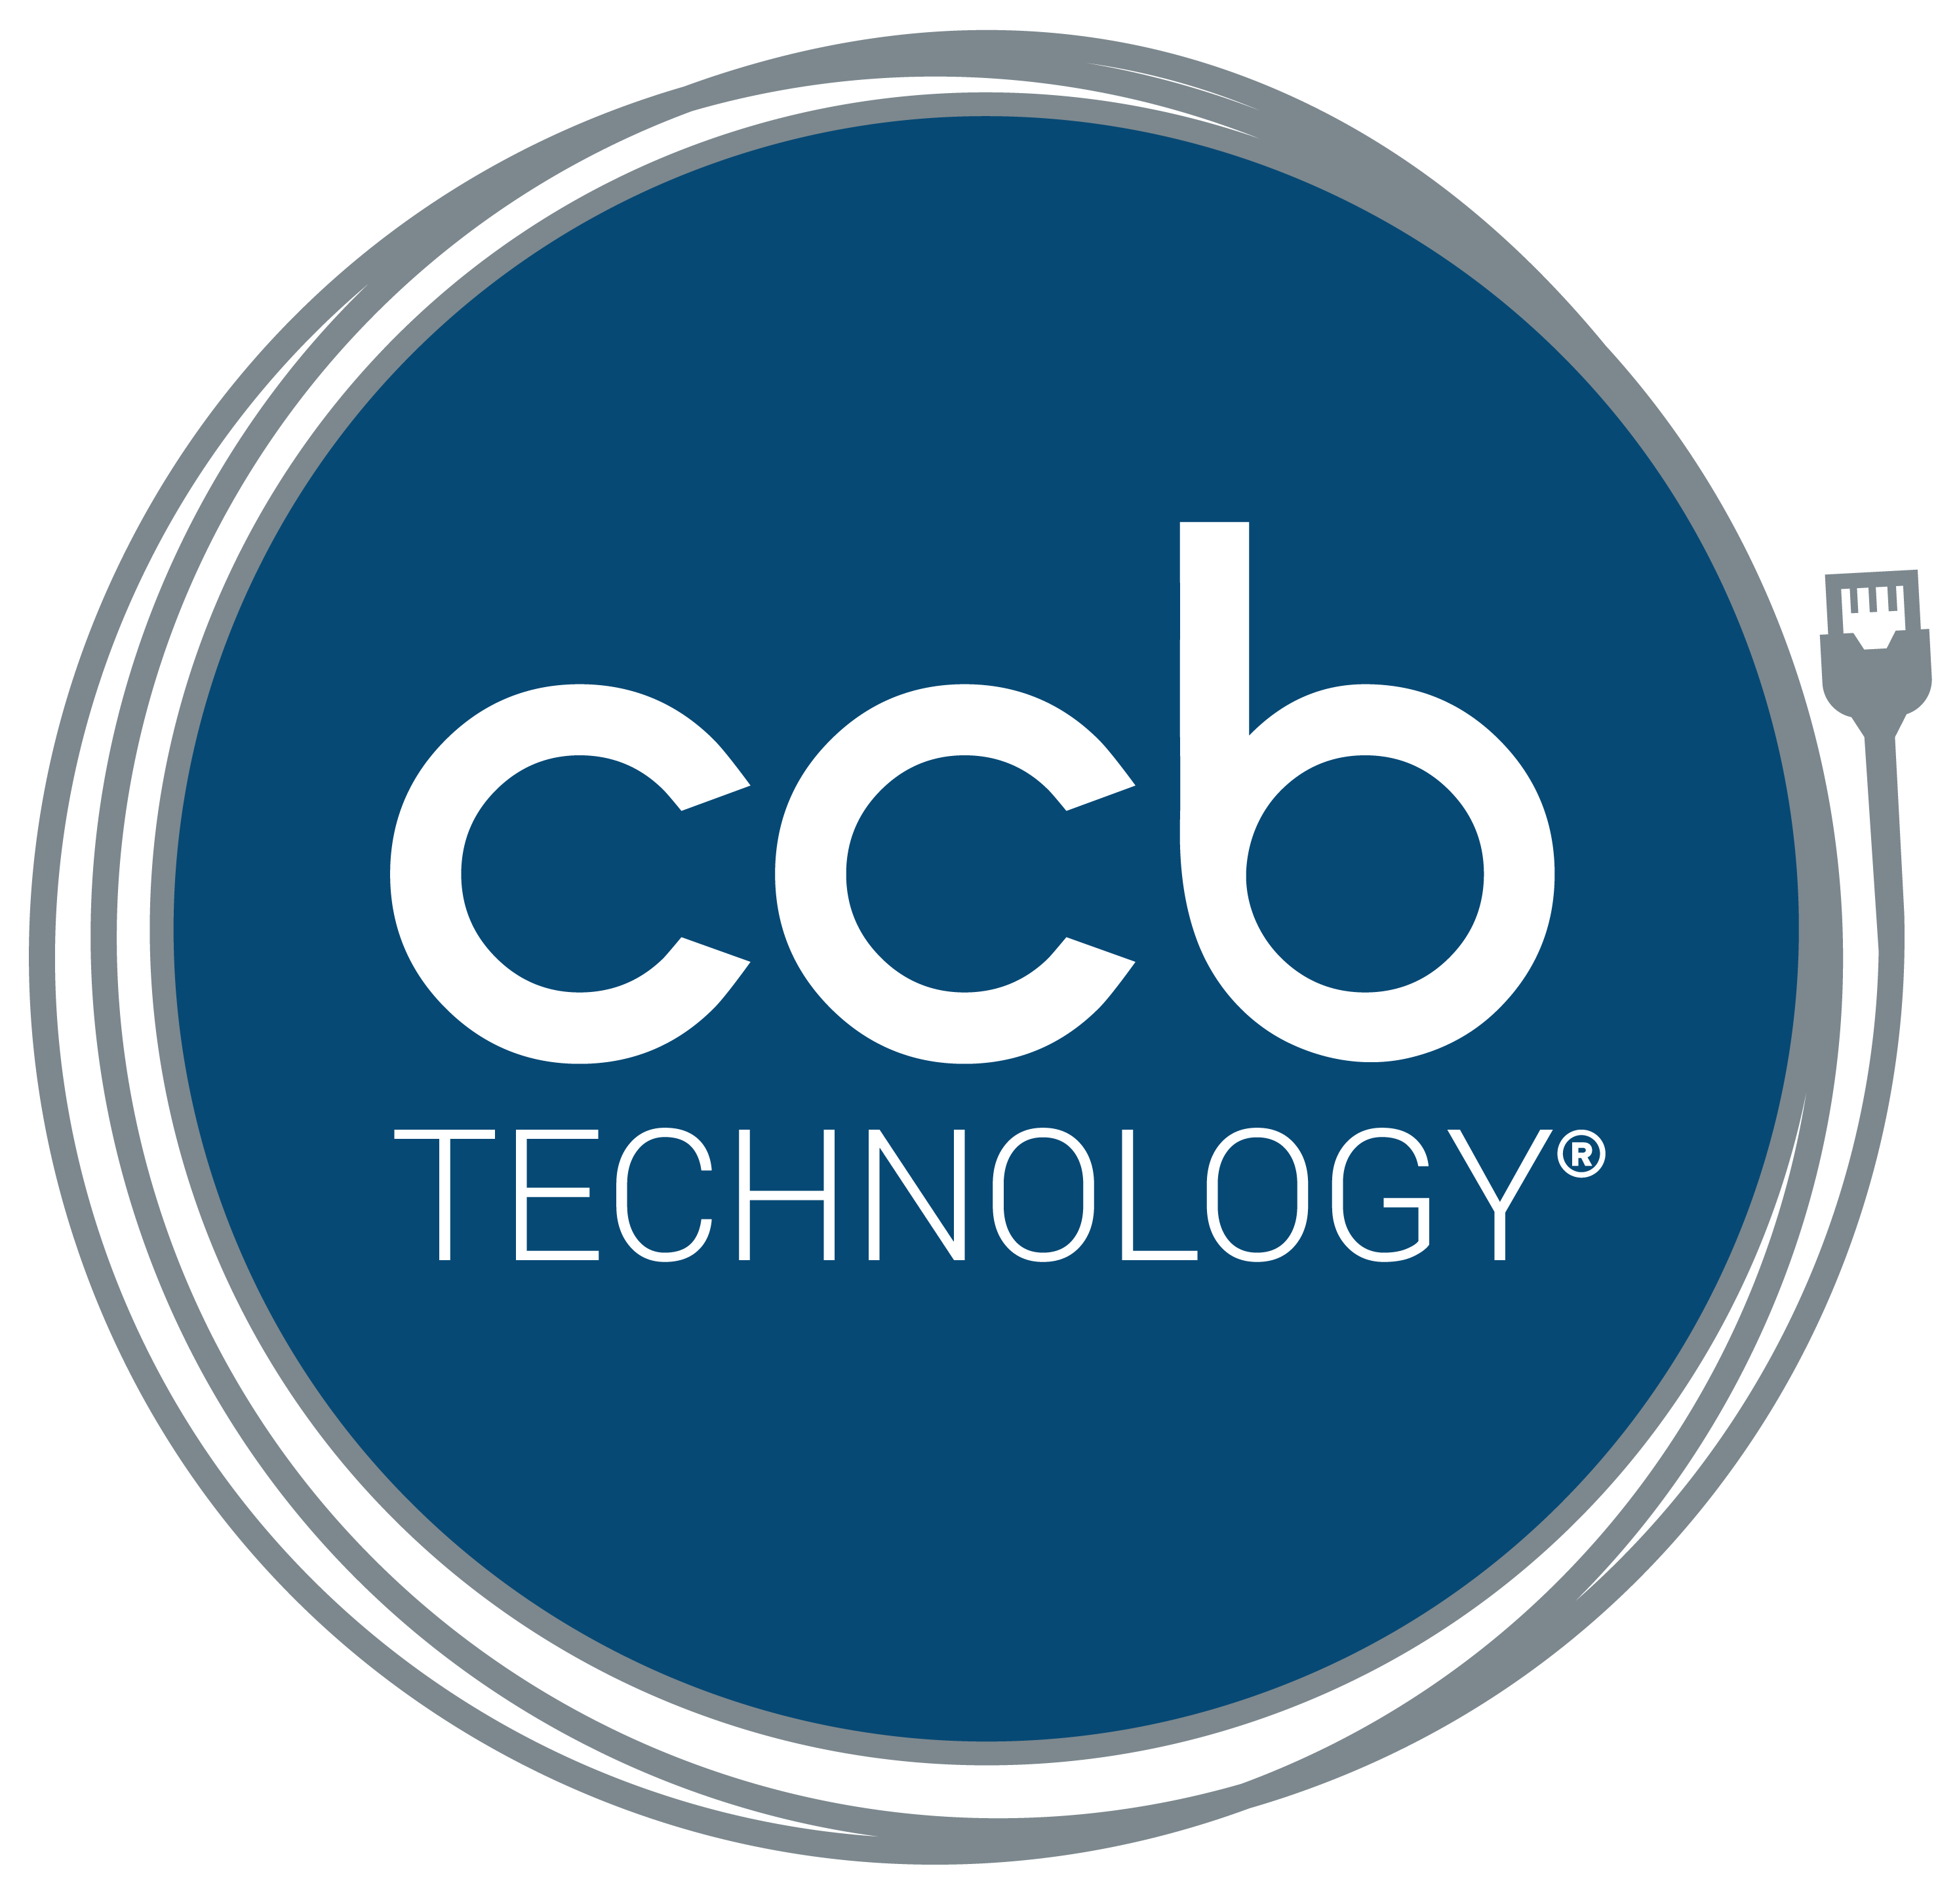 CCB Technology logo